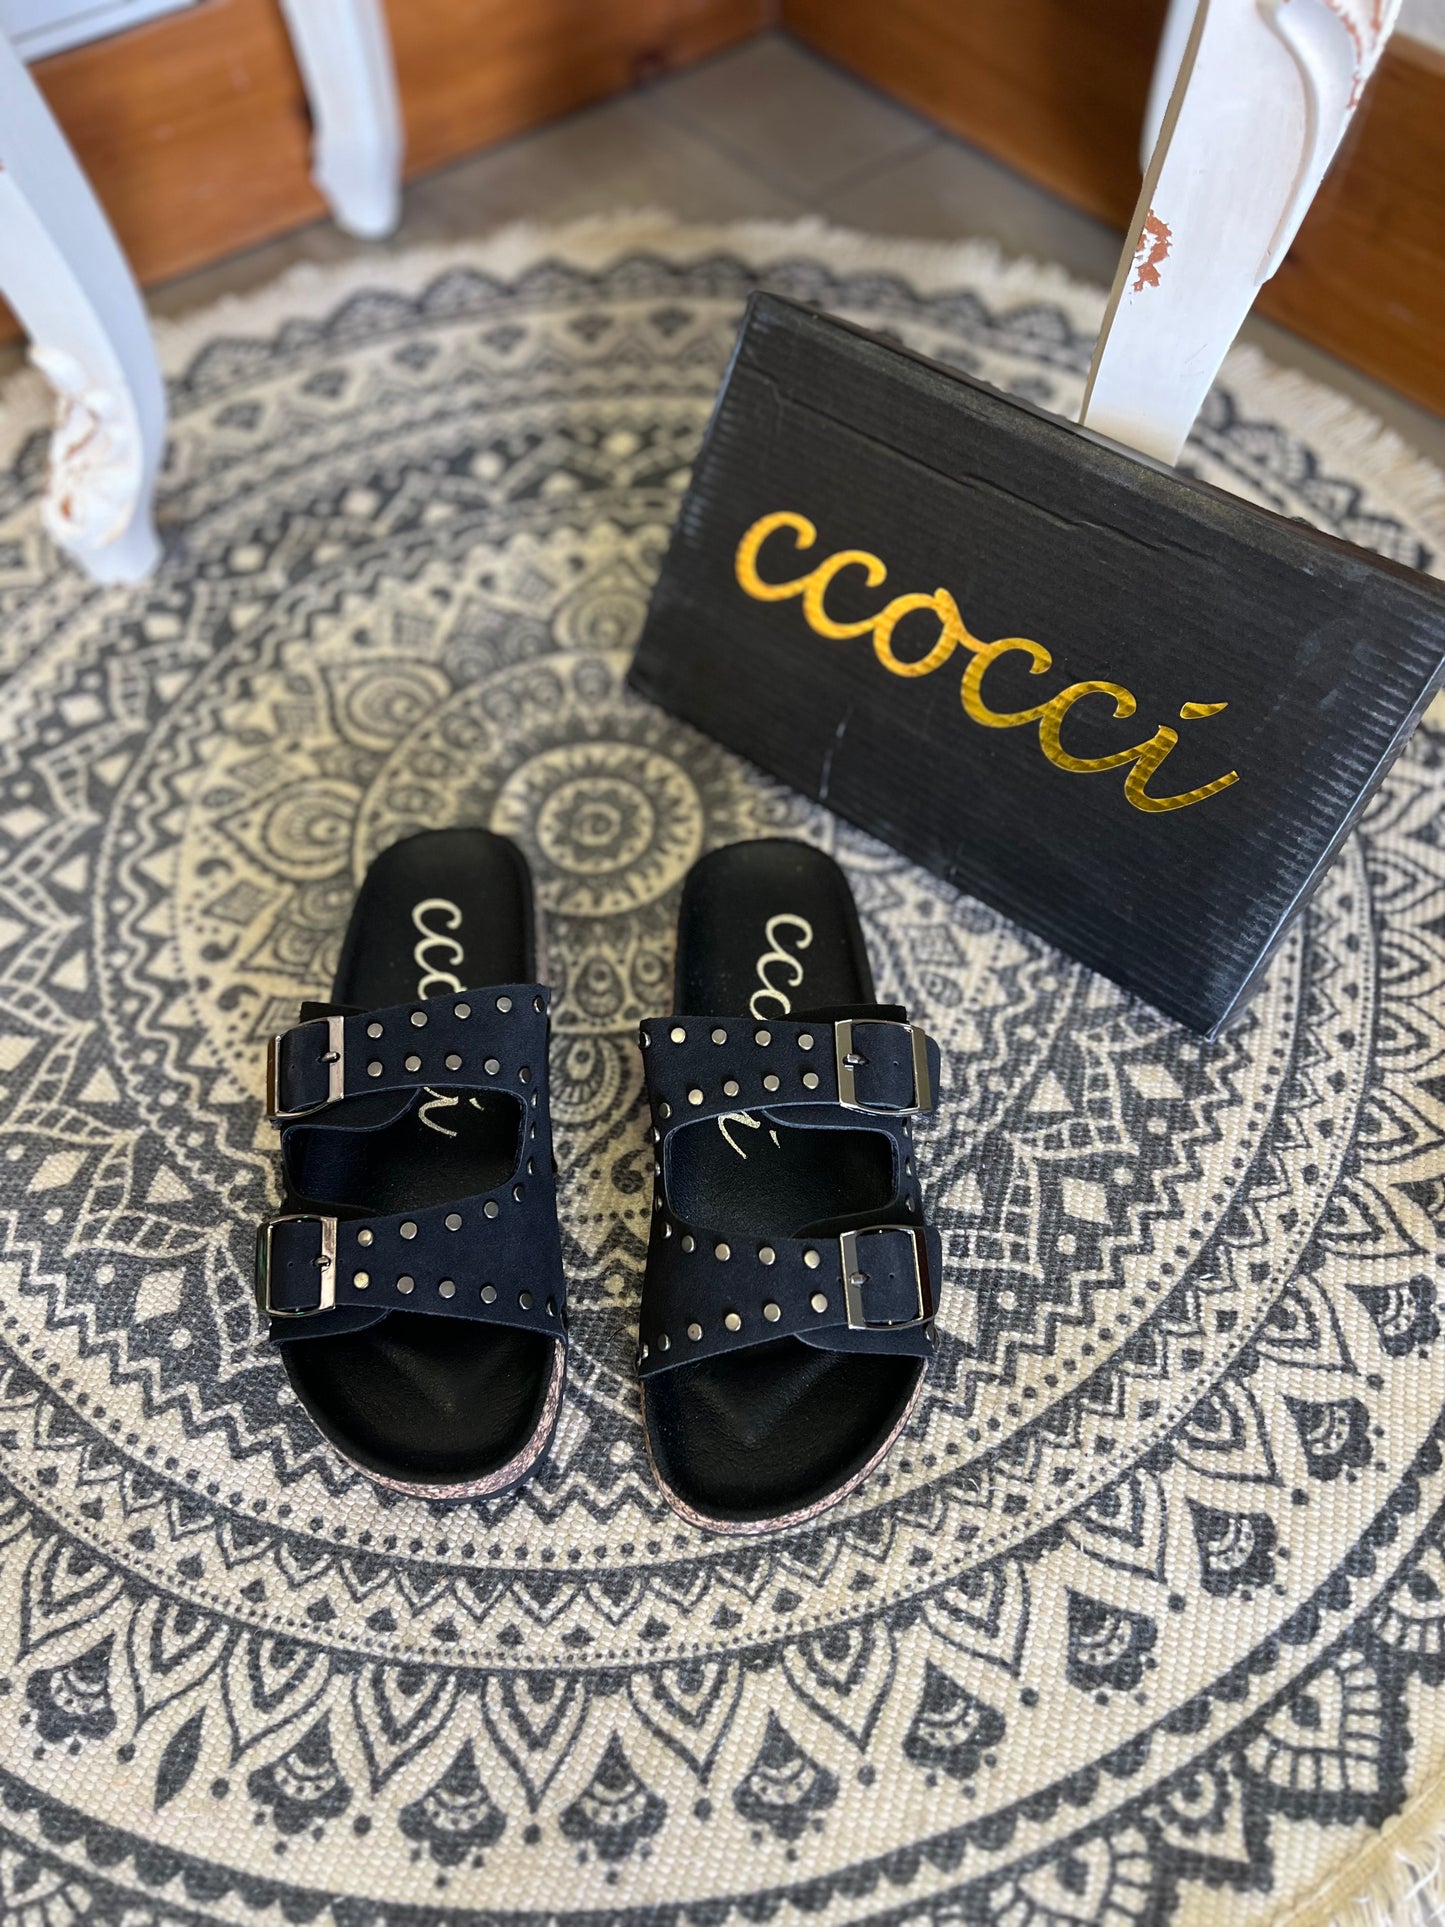 CCOCCI Tilly Studded Sandals